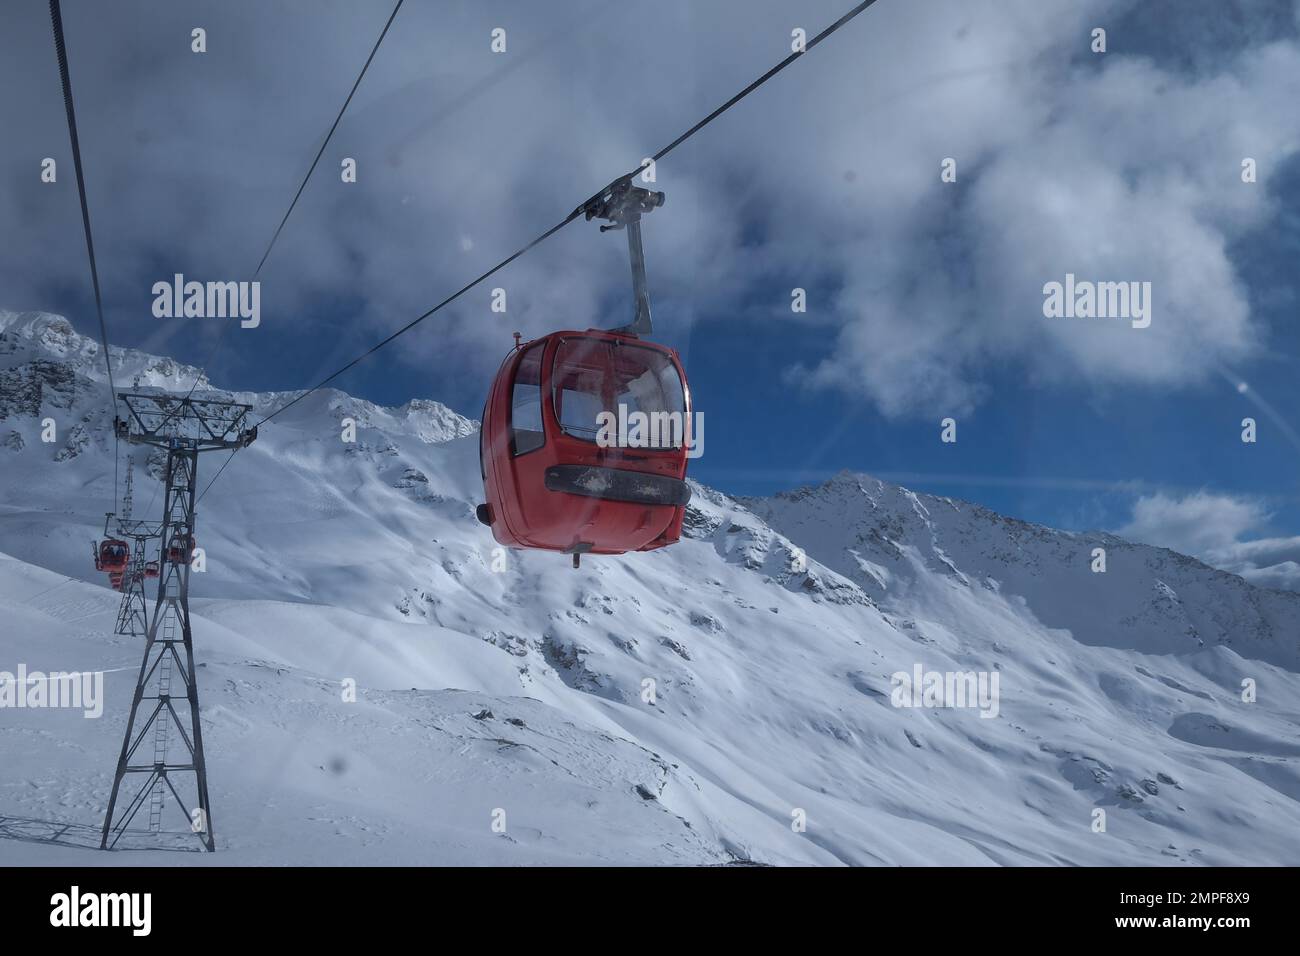 Michael Bunel / Le Pictorium -  Skiing in the Alps -  3/1/2016  -  Savoie / France / La plagne  -  illustration ski holidays. the cable car / telesieg Stock Photo